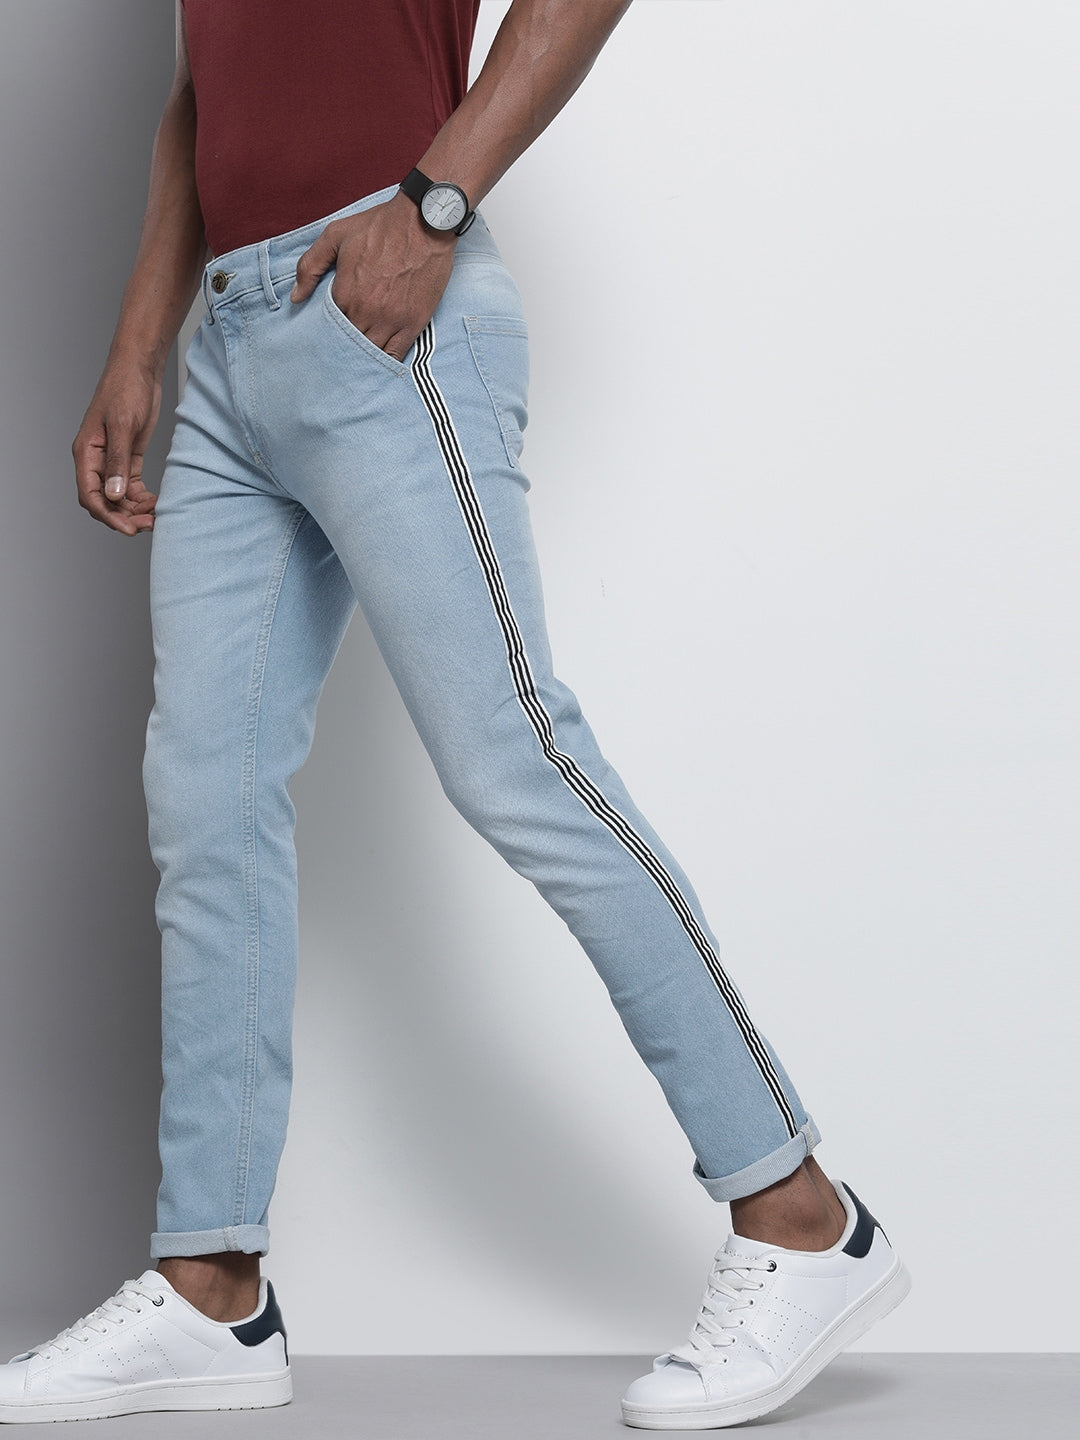 Shop Men Solid Jeans Online.